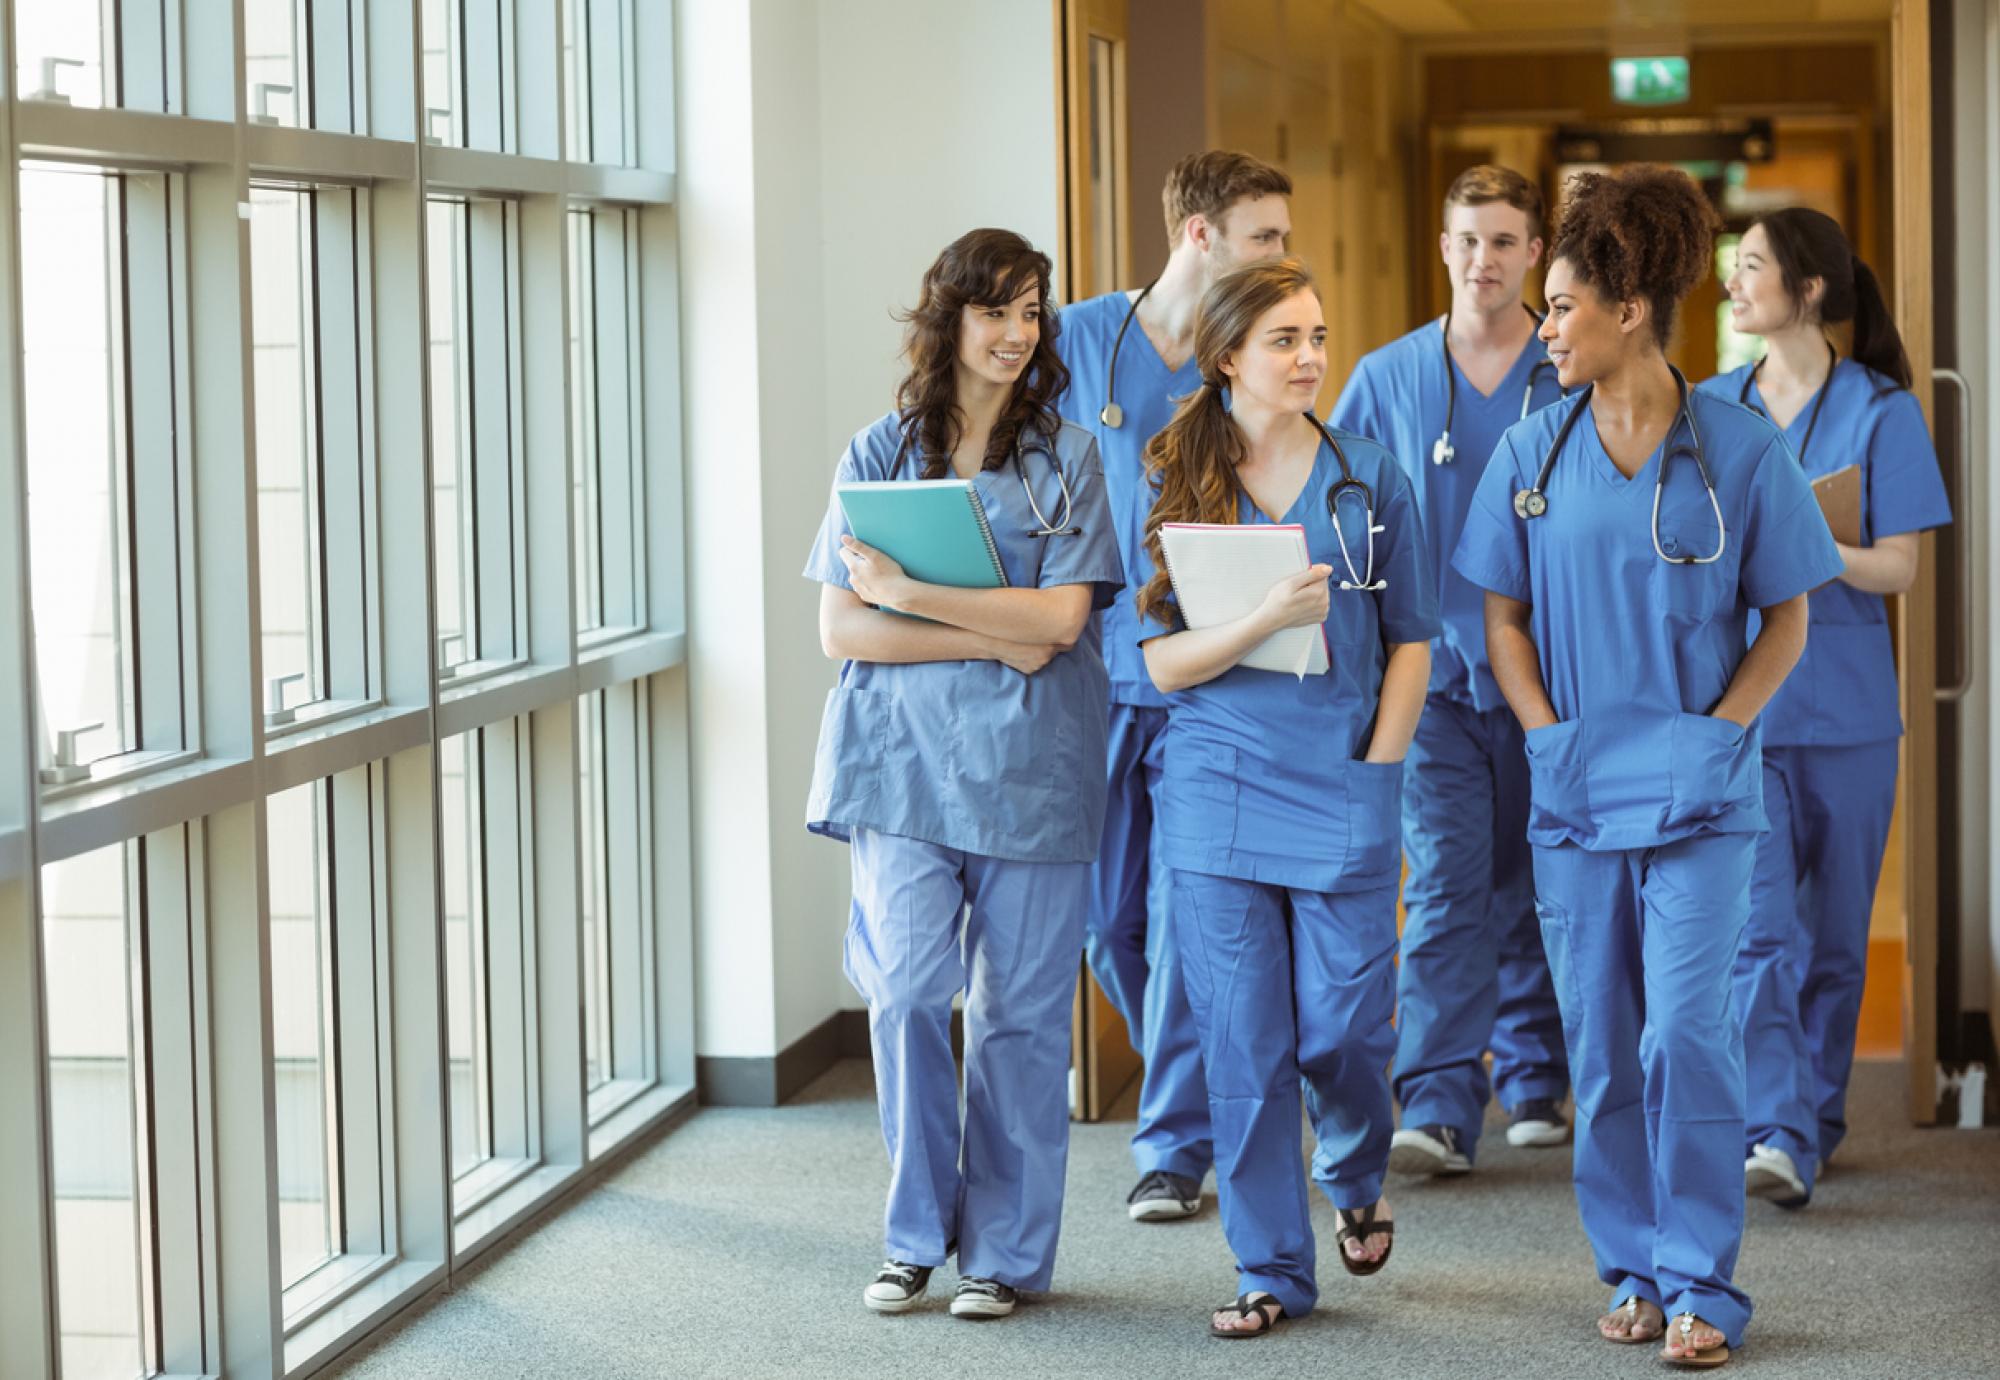 Medical students walking through a hospital